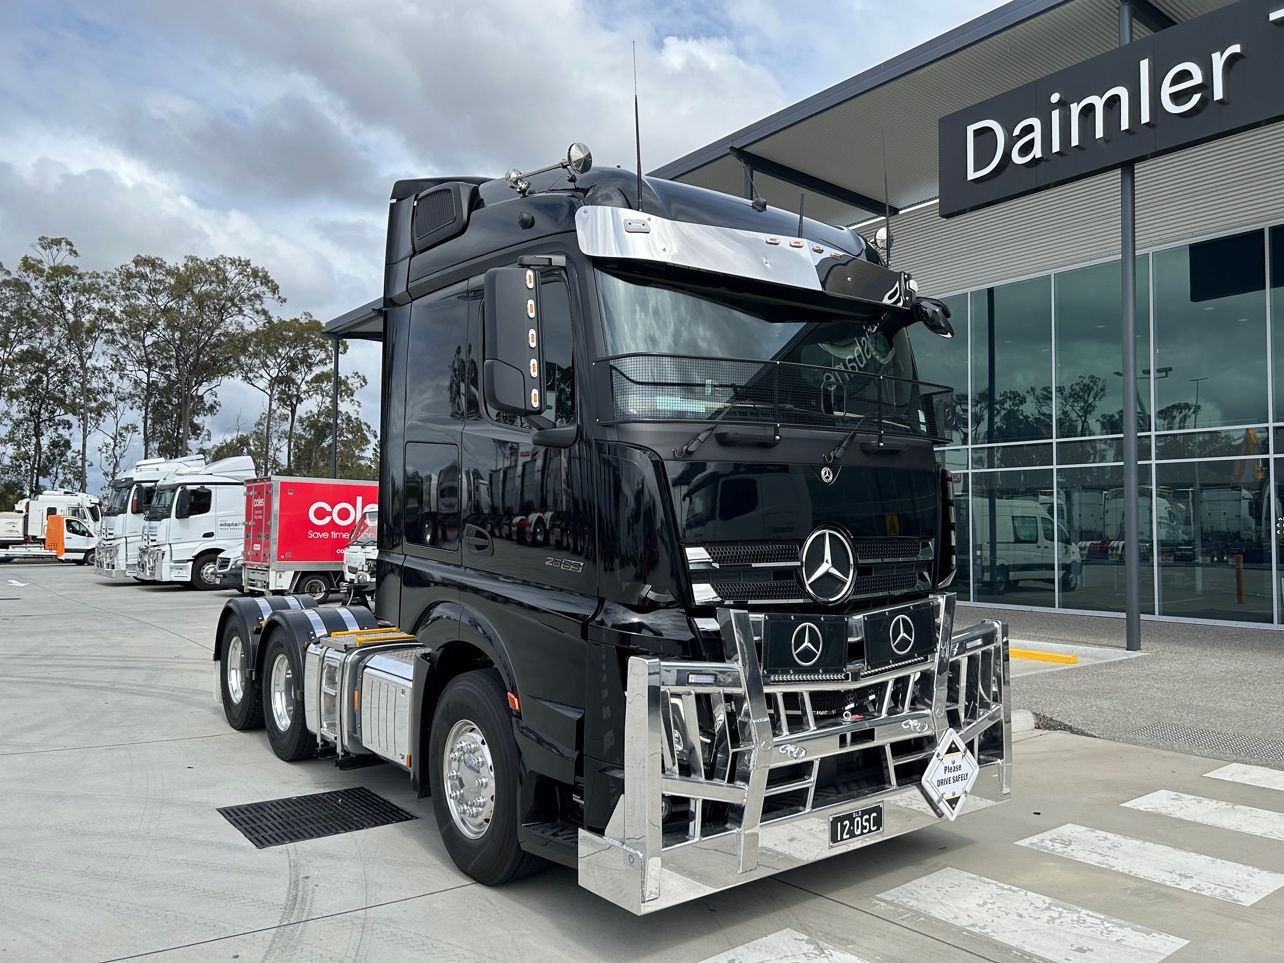 A busy end of year for Daimler Trucks Brisbane